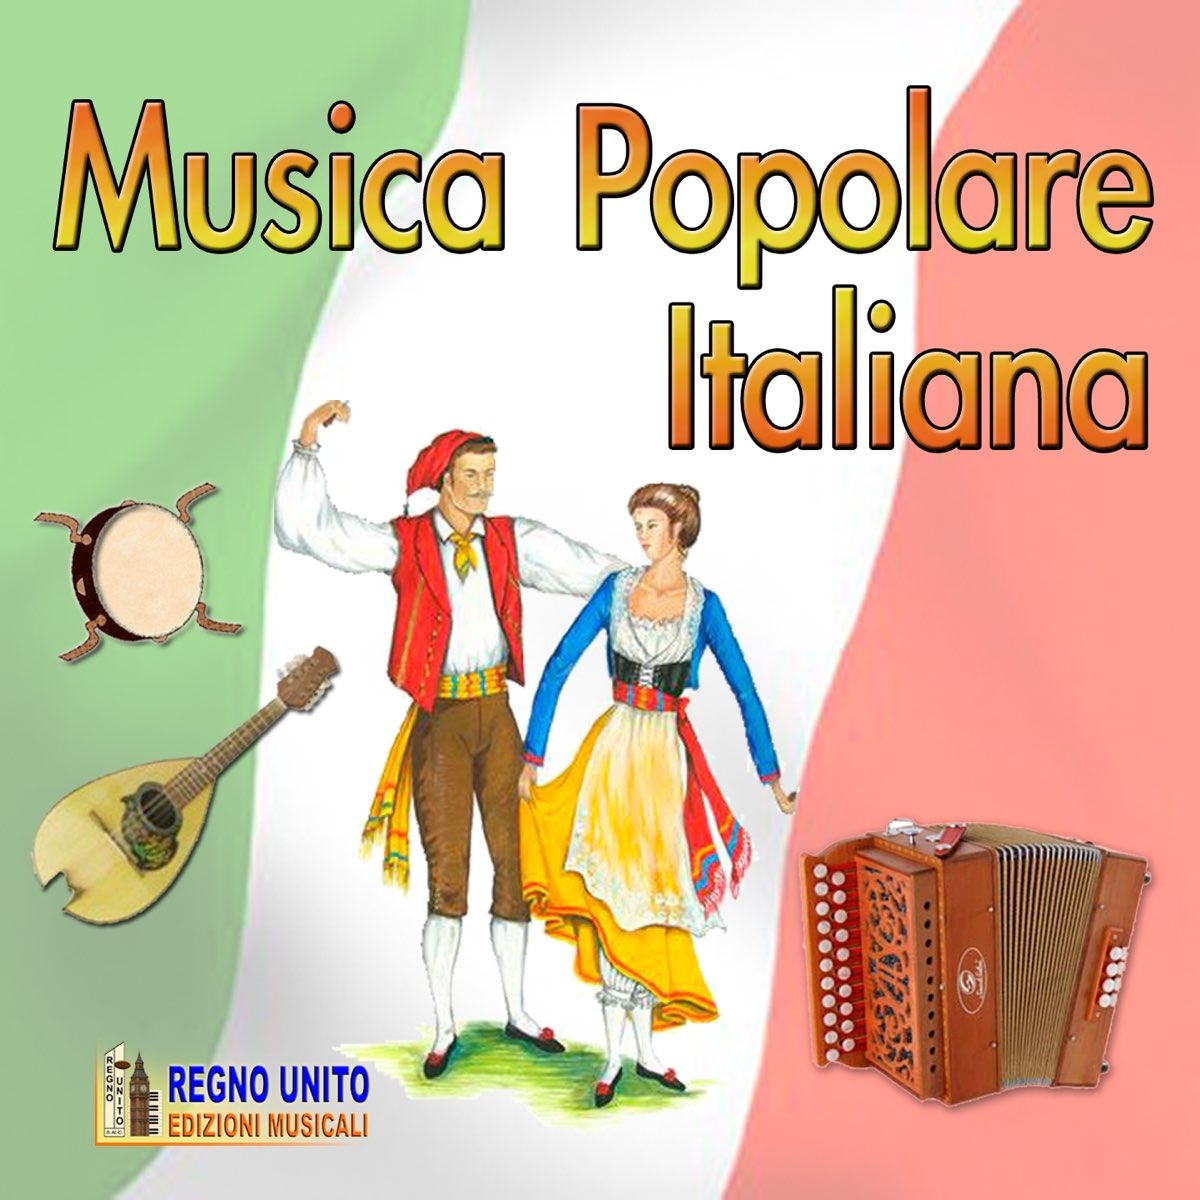 Musica popolare italiana - Album by Samantha - Apple Music